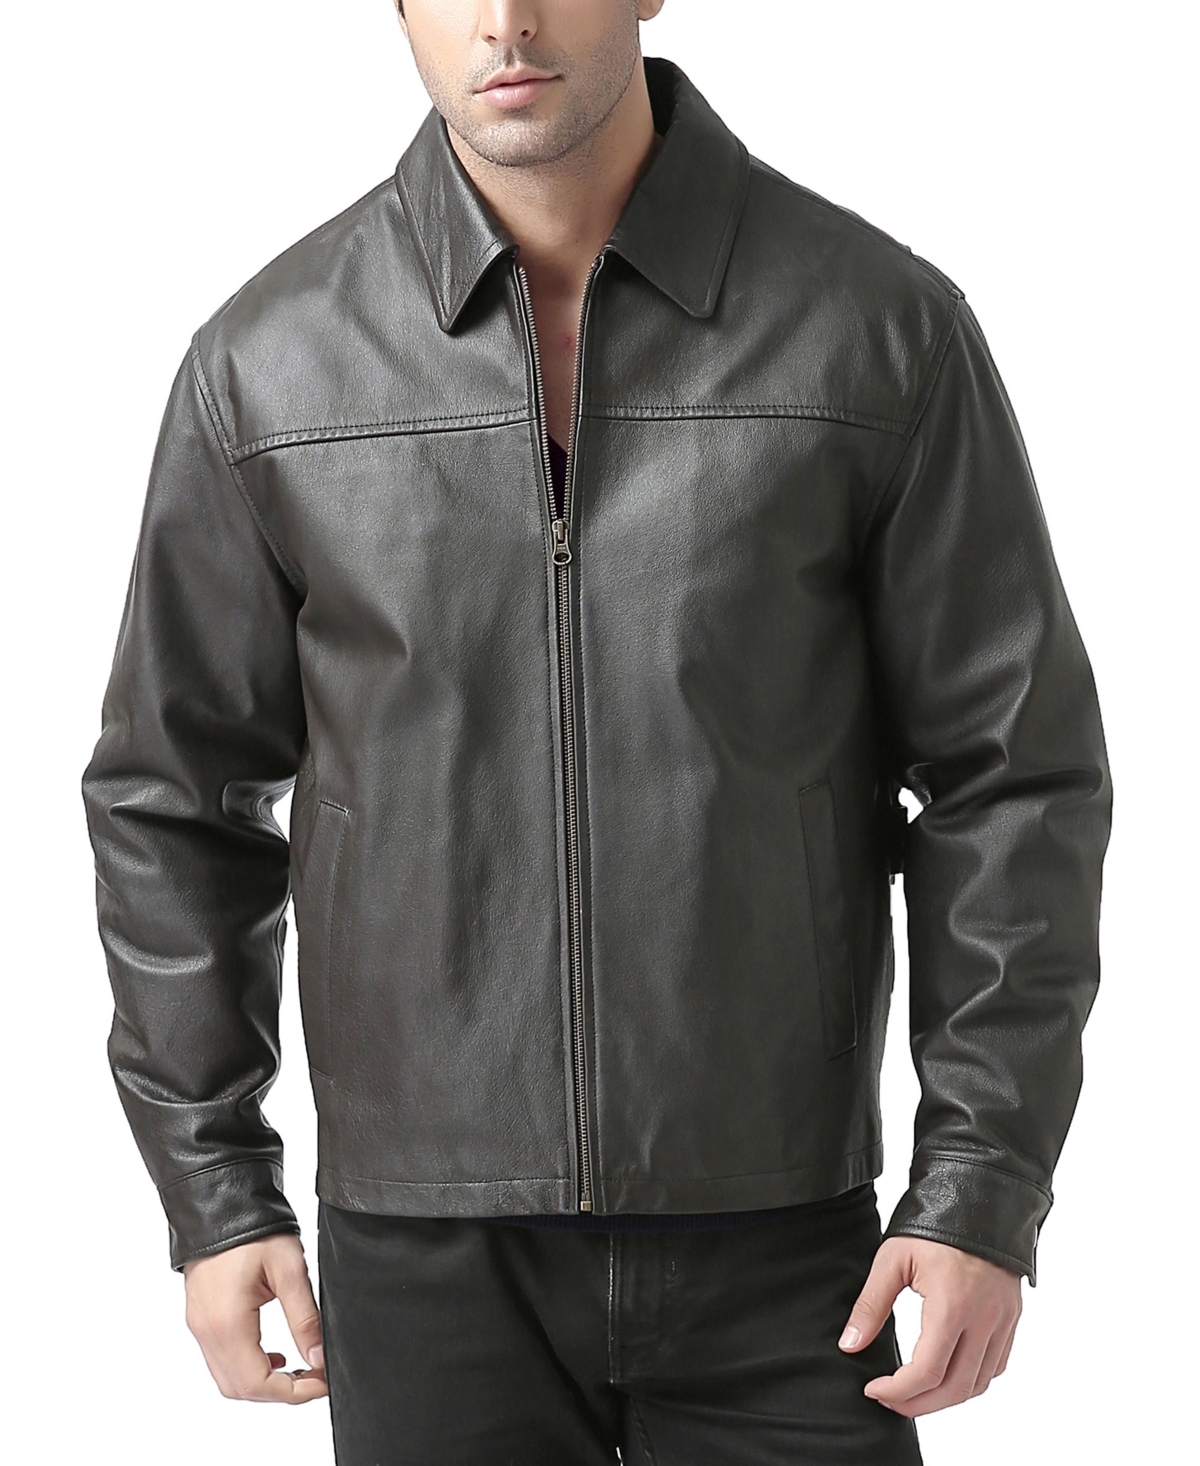 Men Greg Open Bottom Zip Front Leather Jacket - Tall - Black